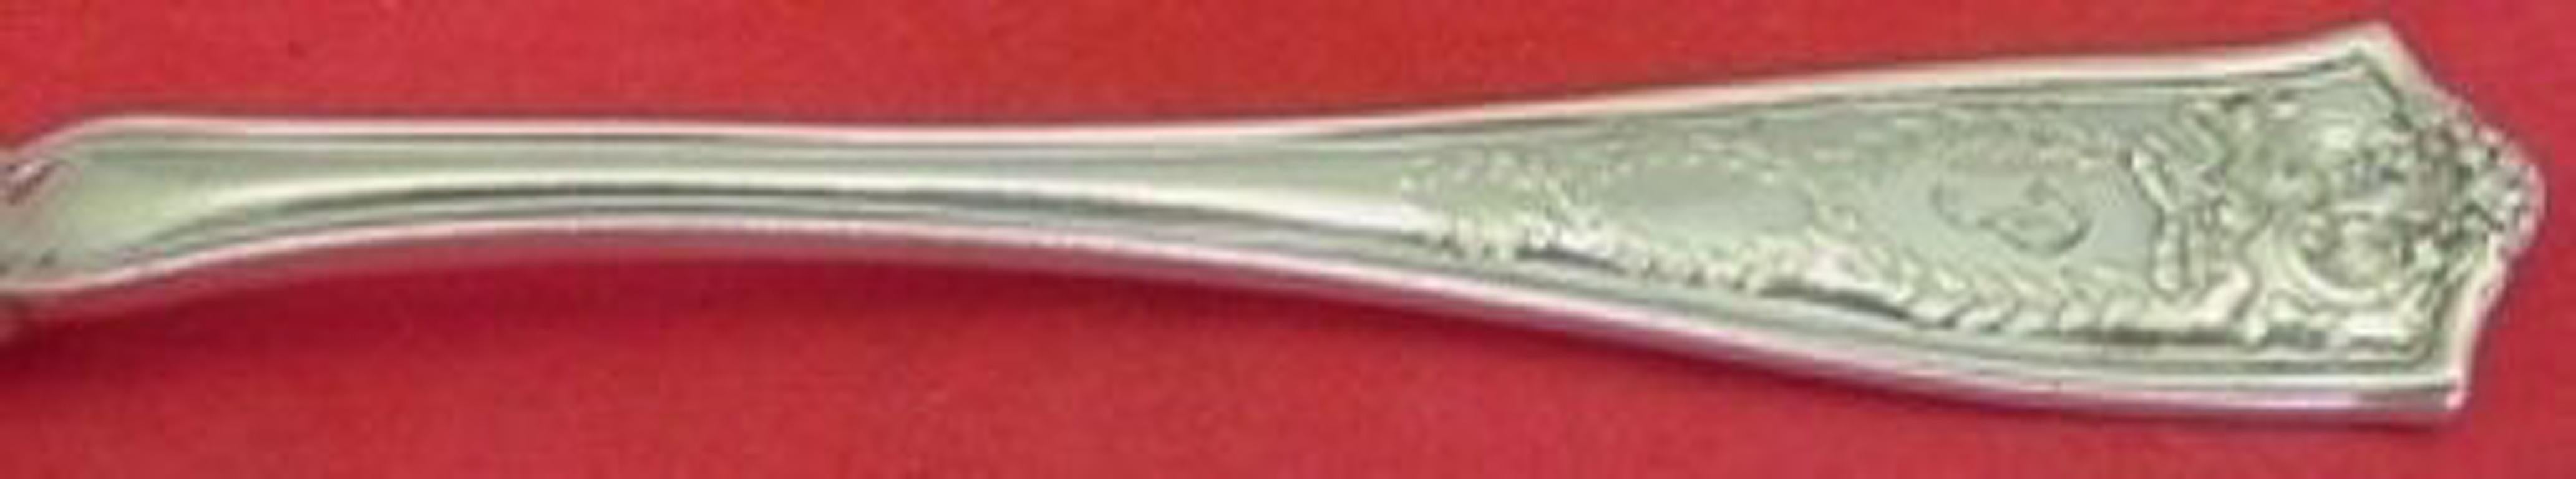 Sterling silver regular fork 6 3/4